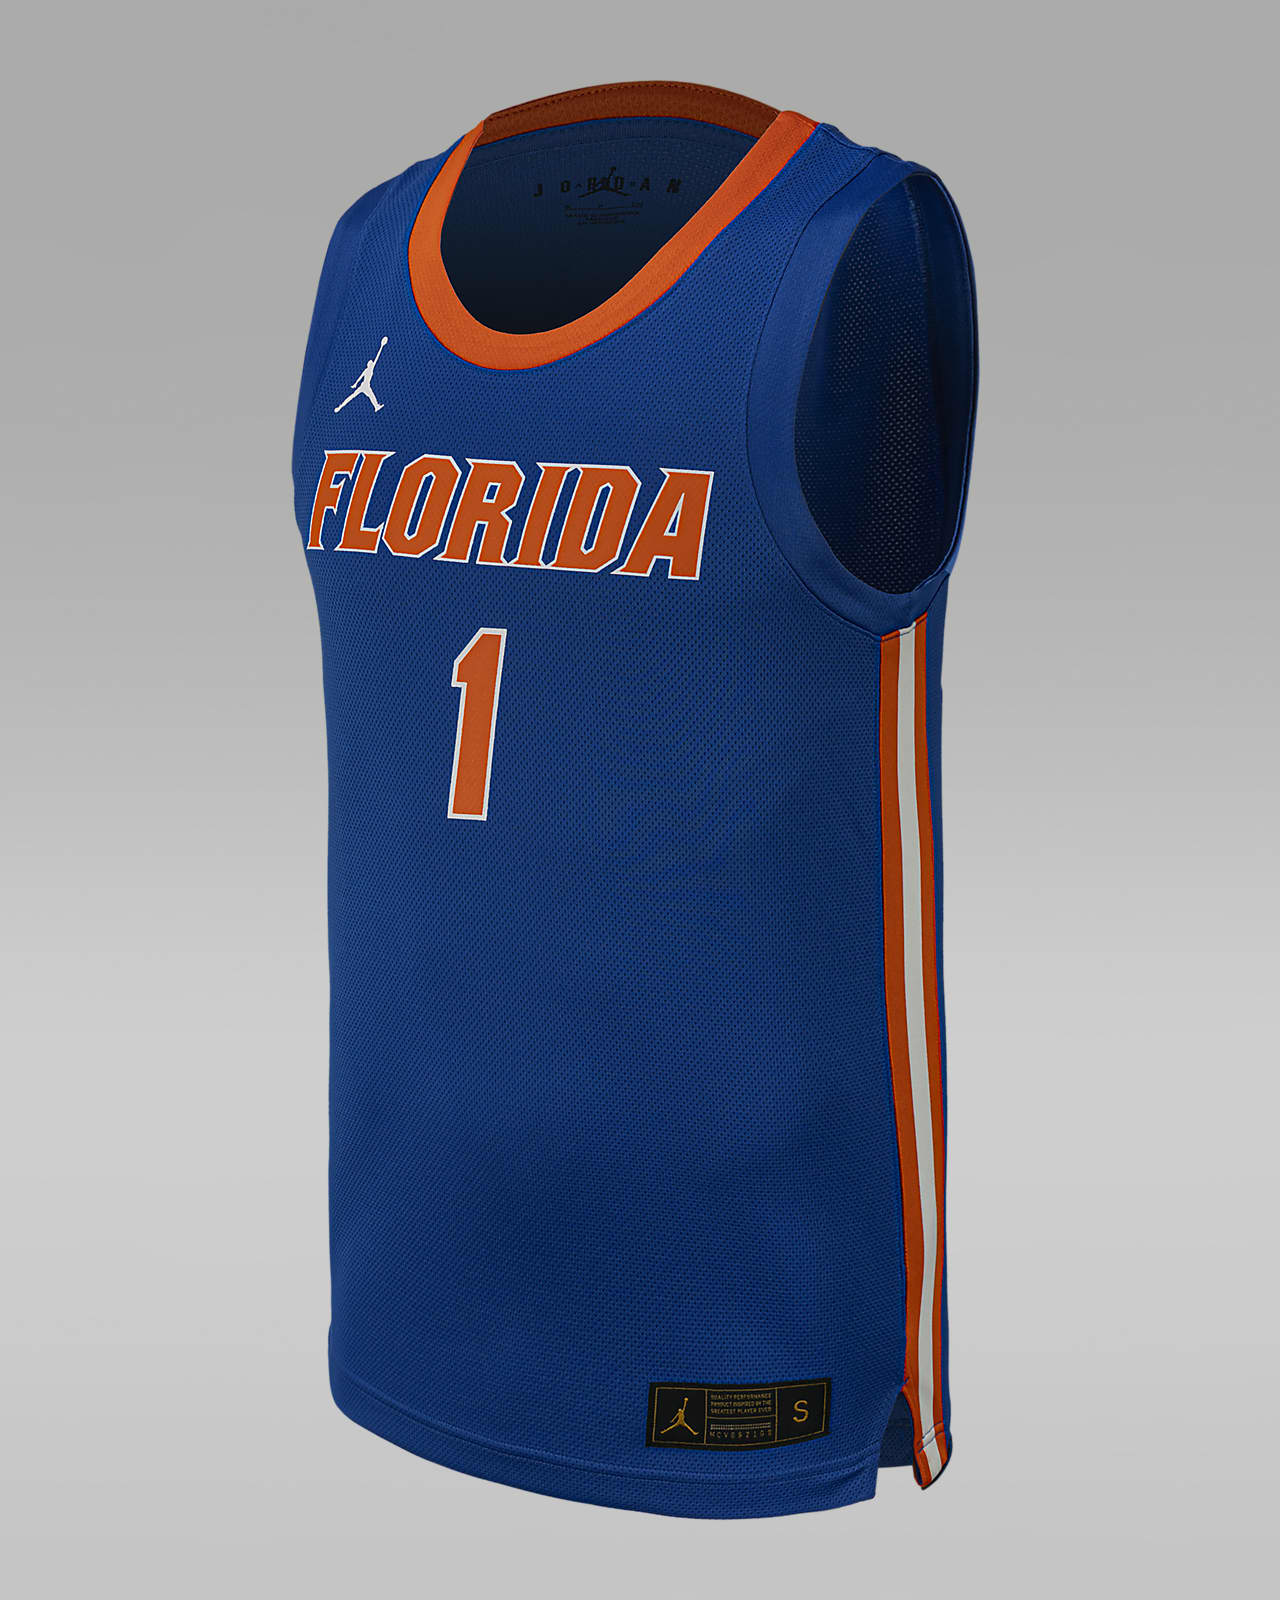 Florida Men's Jordan College Basketball Replica Jersey